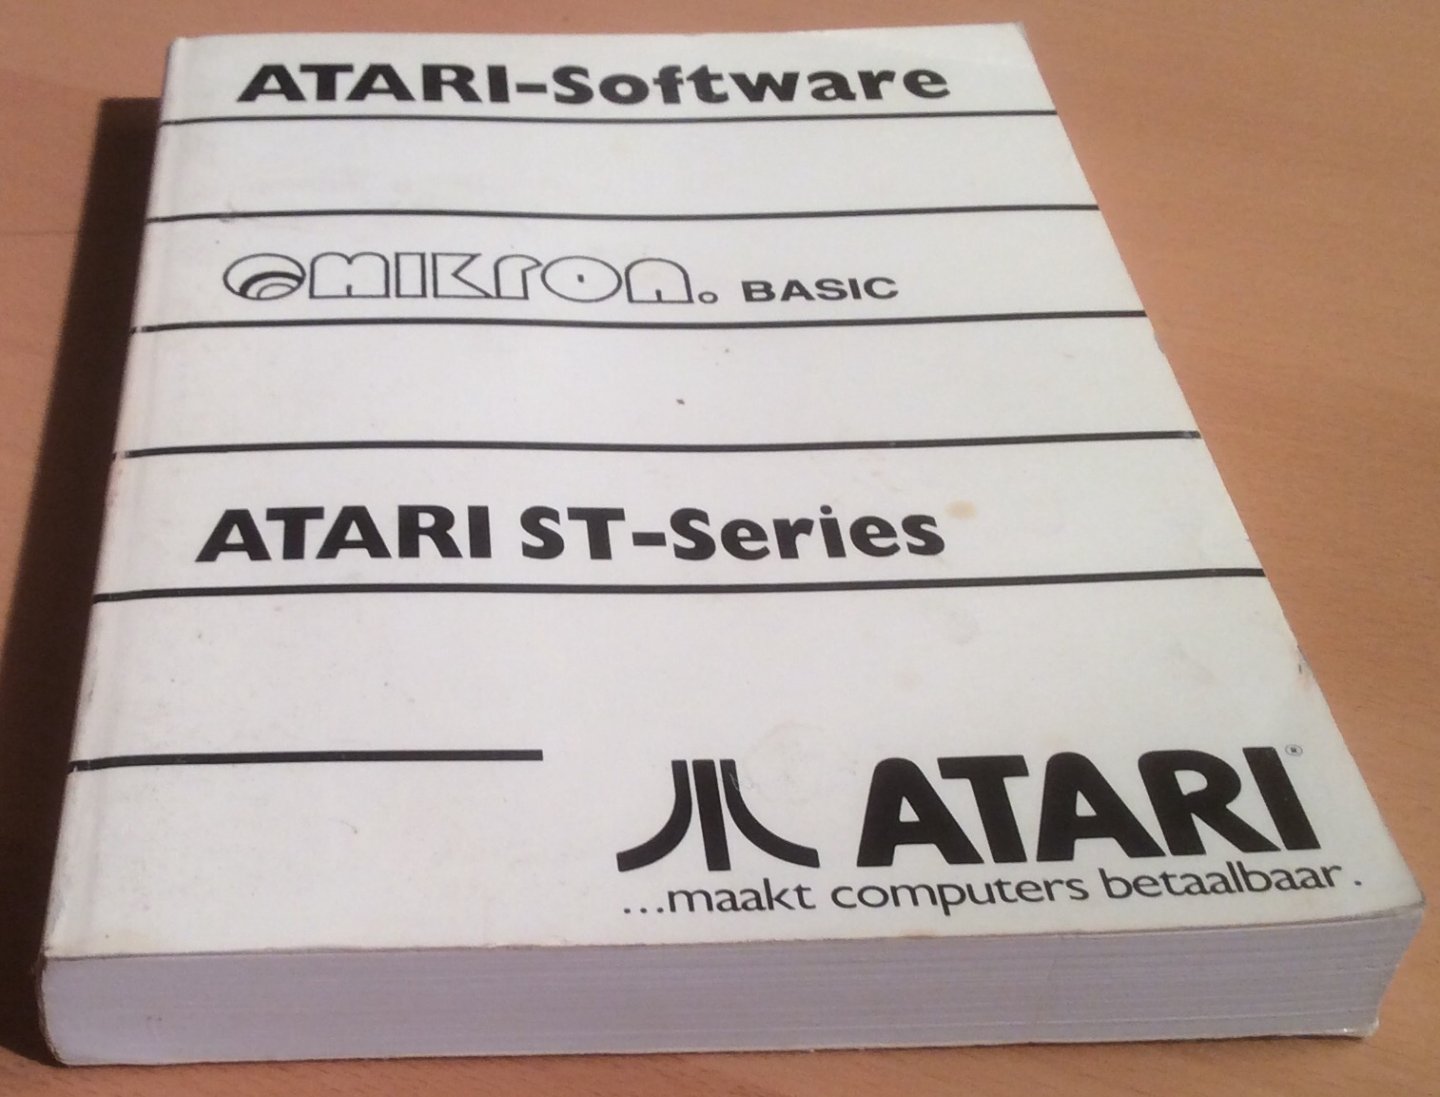 Atari / Kraus, C / Th. Kemp / A. Södler - Atari-Software Omikron. Basic. Atari ST-Series